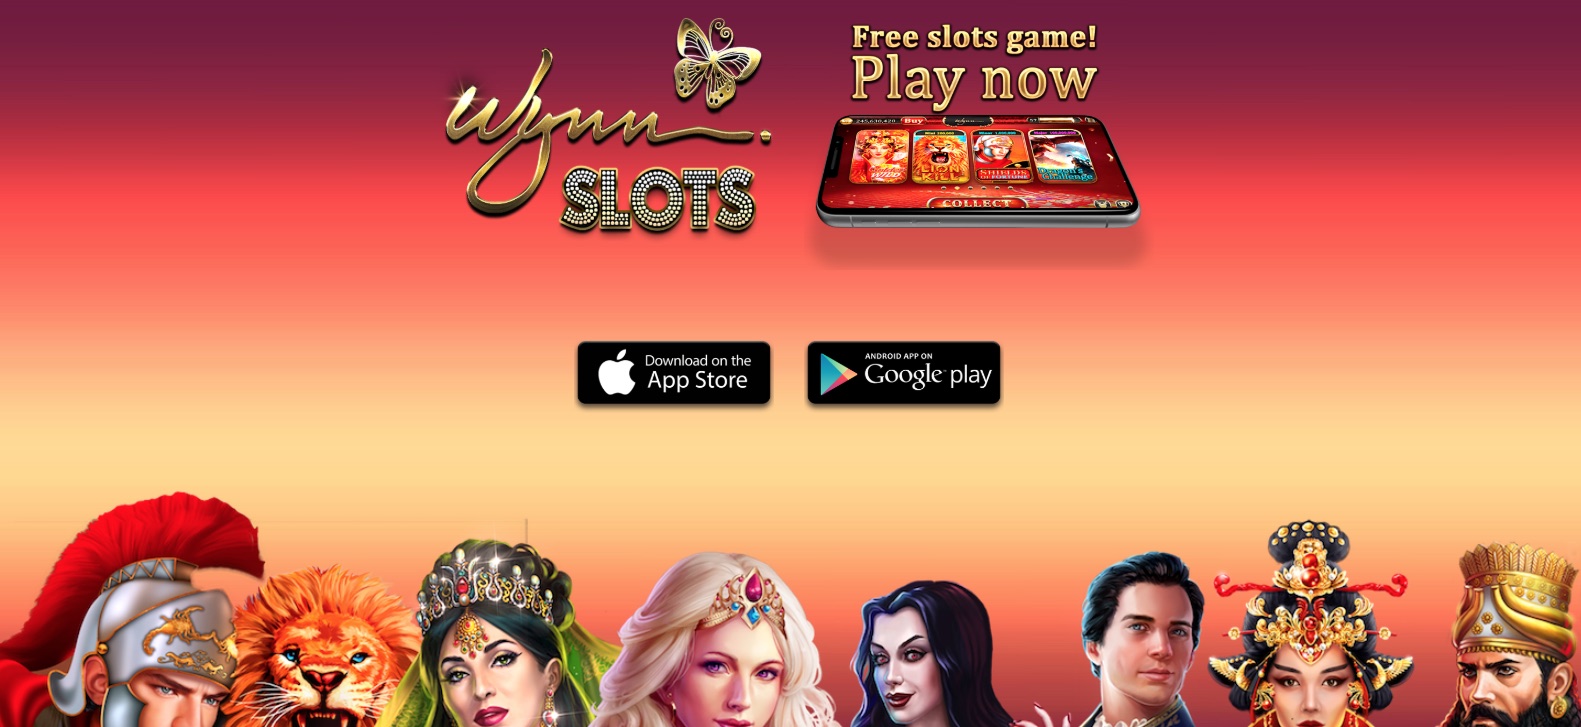 Wynn free slots app